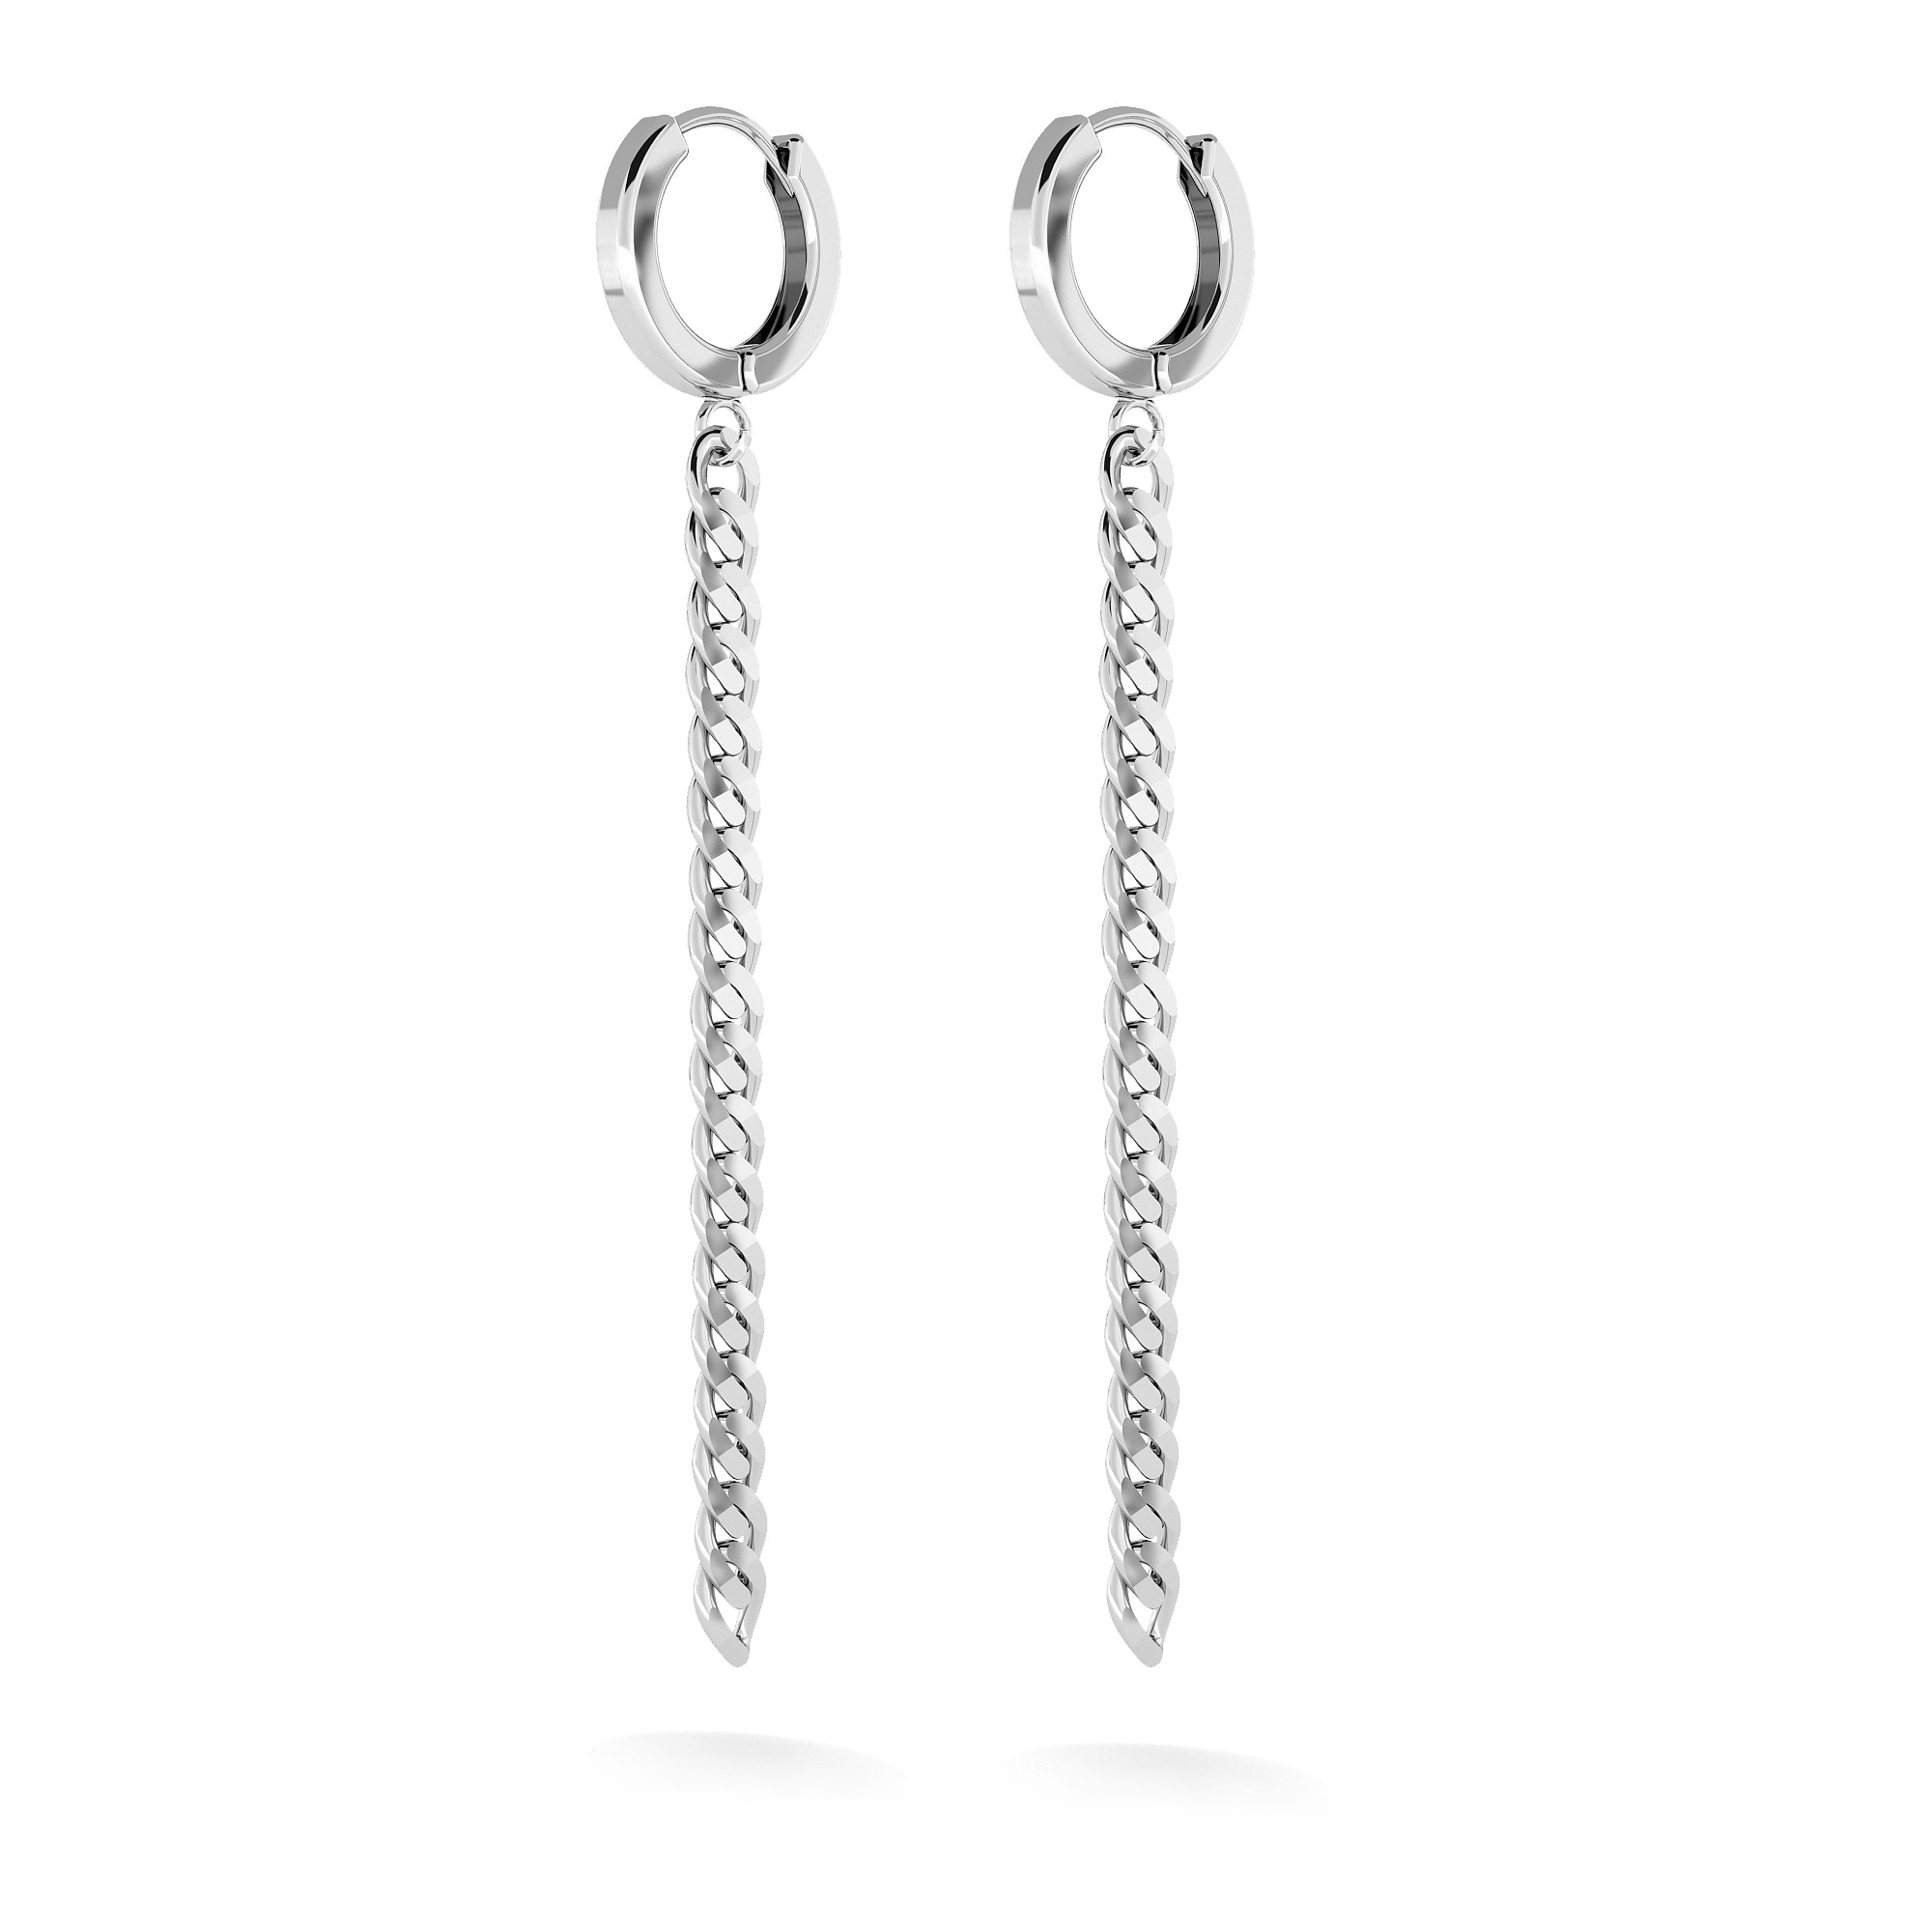 Hanging link chain earrings, T°ra'vel'' sterling silver 925